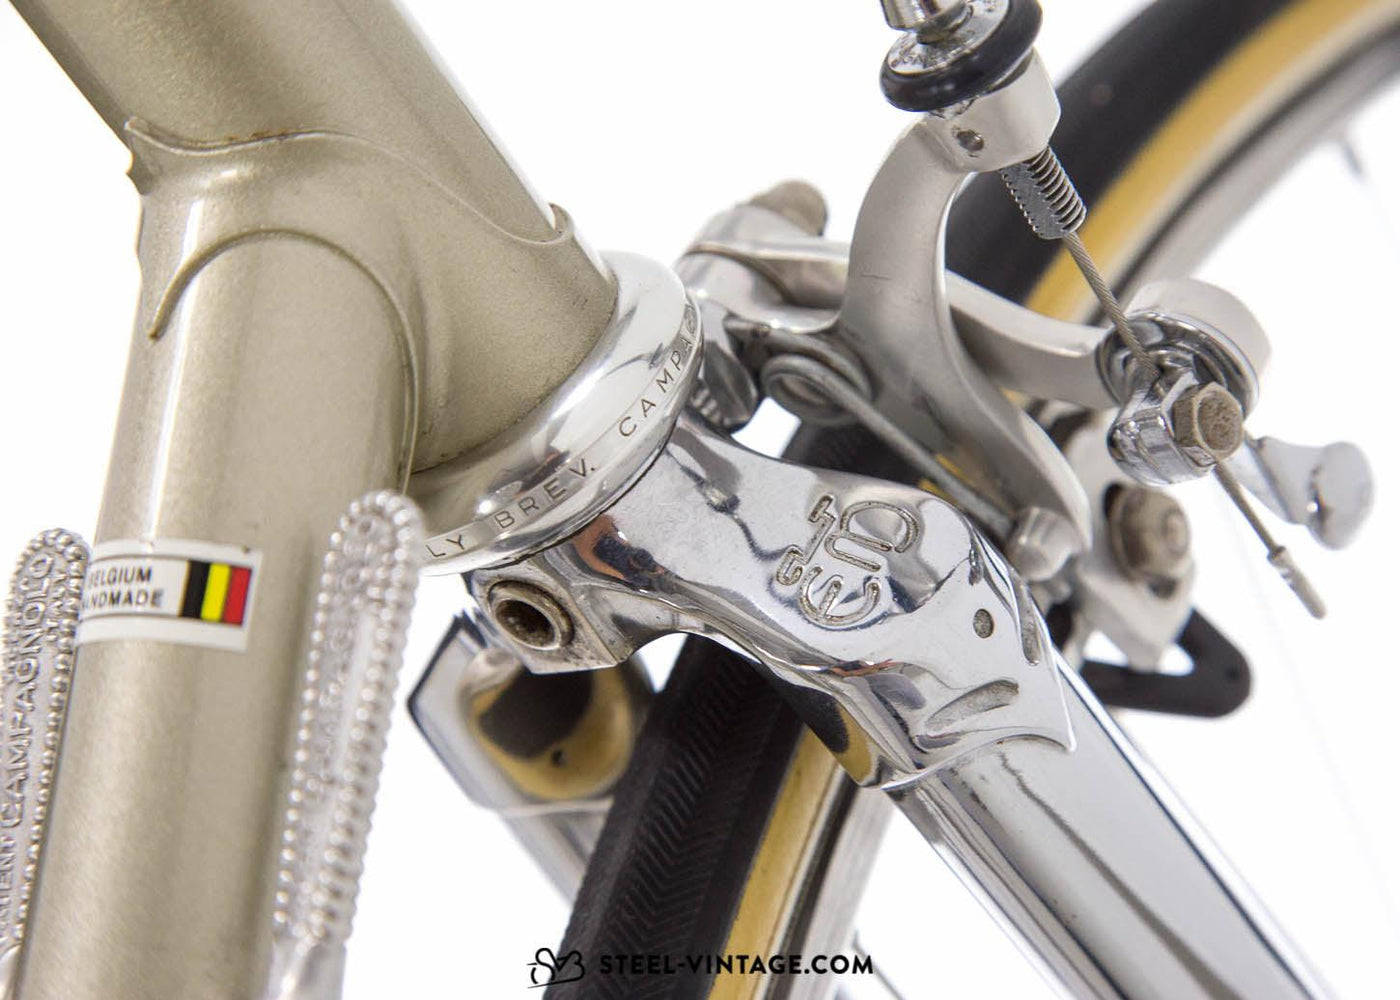 Merckx Professional Classic Road Bike 1980s - Steel Vintage Bikes